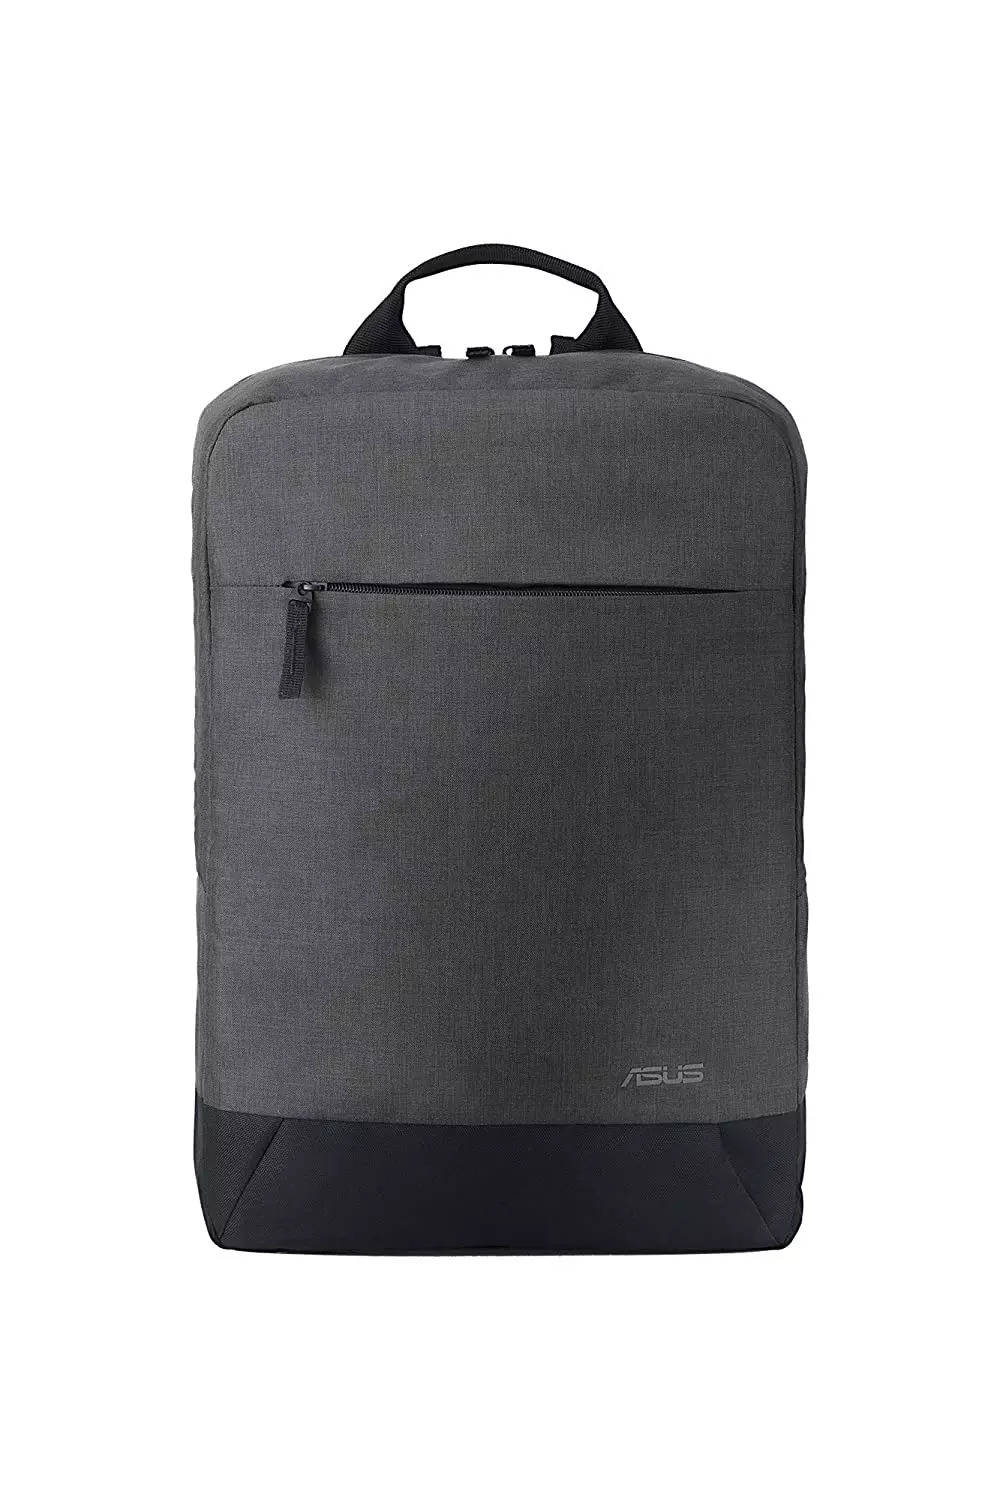 Wesley Milestone 2.0 15.6 inch 30 L Casual Waterproof Laptop Backpack/Office  Bag/School Bag/College Bag/Business Bag/Unisex Travel Backpack (Blue and  Black) - Buy Wesley Milestone 2.0 15.6 inch 30 L Casual Waterproof Laptop